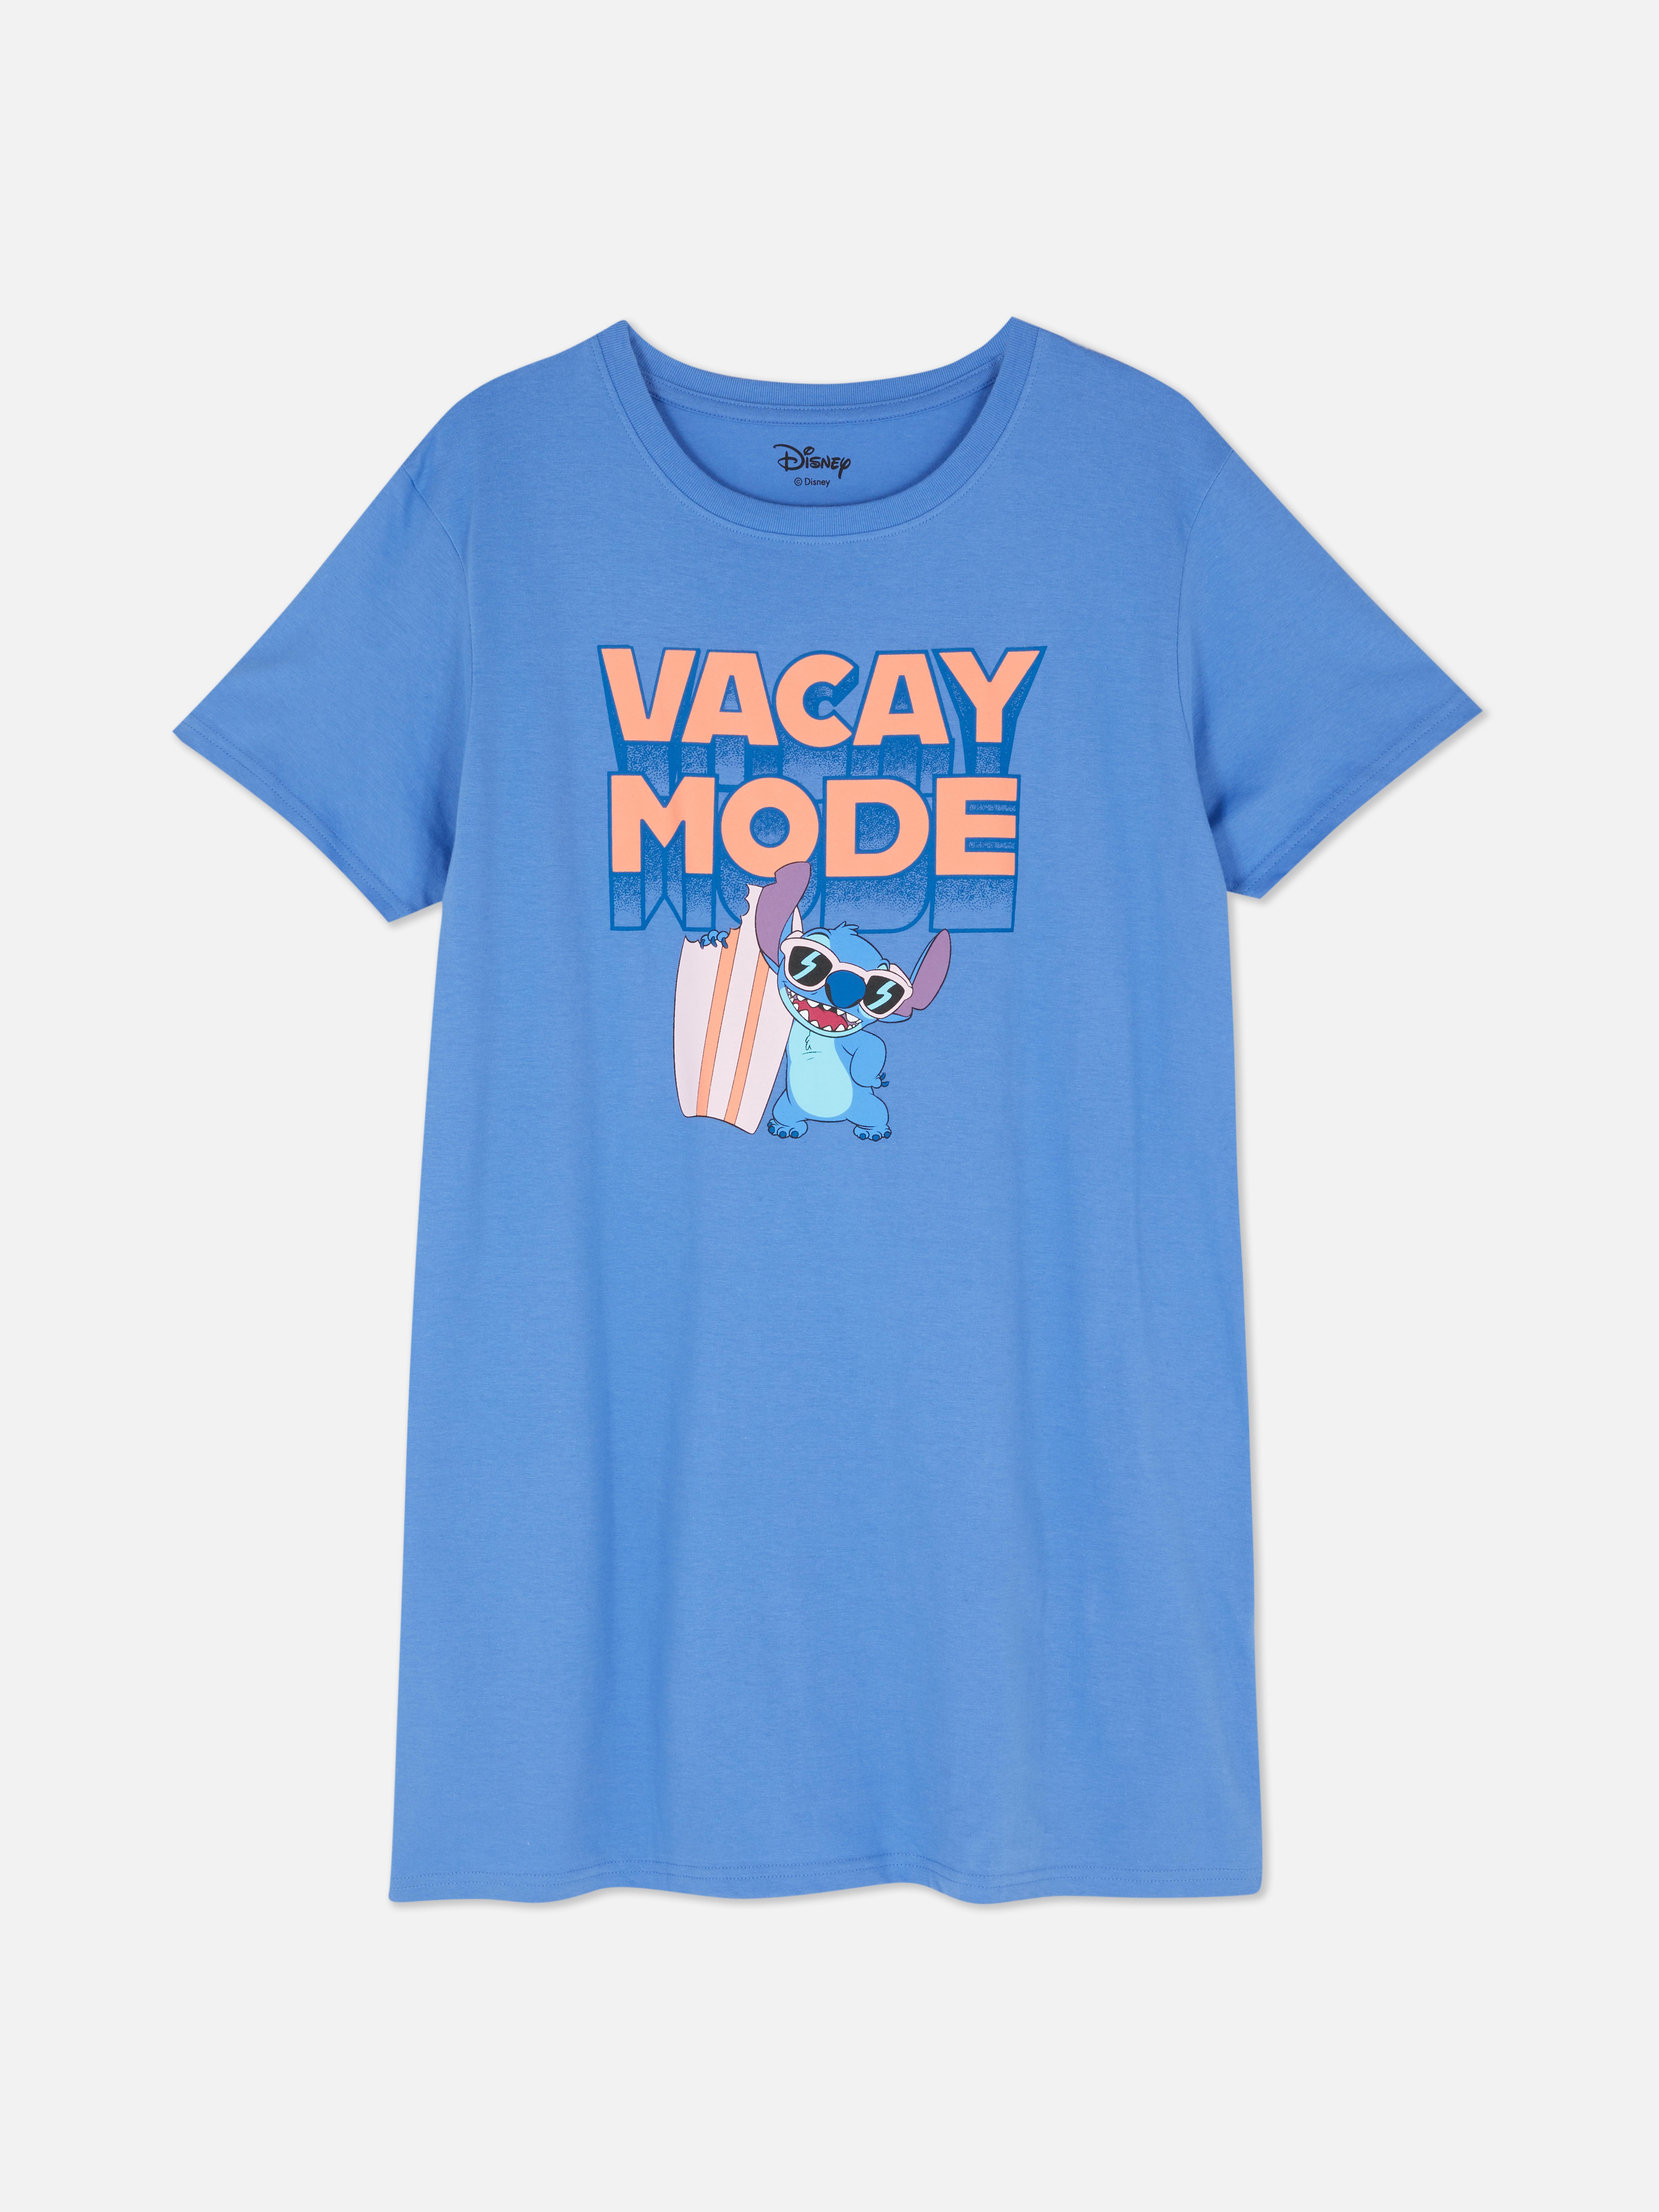 Camiseta de pijama con personaje de Disney